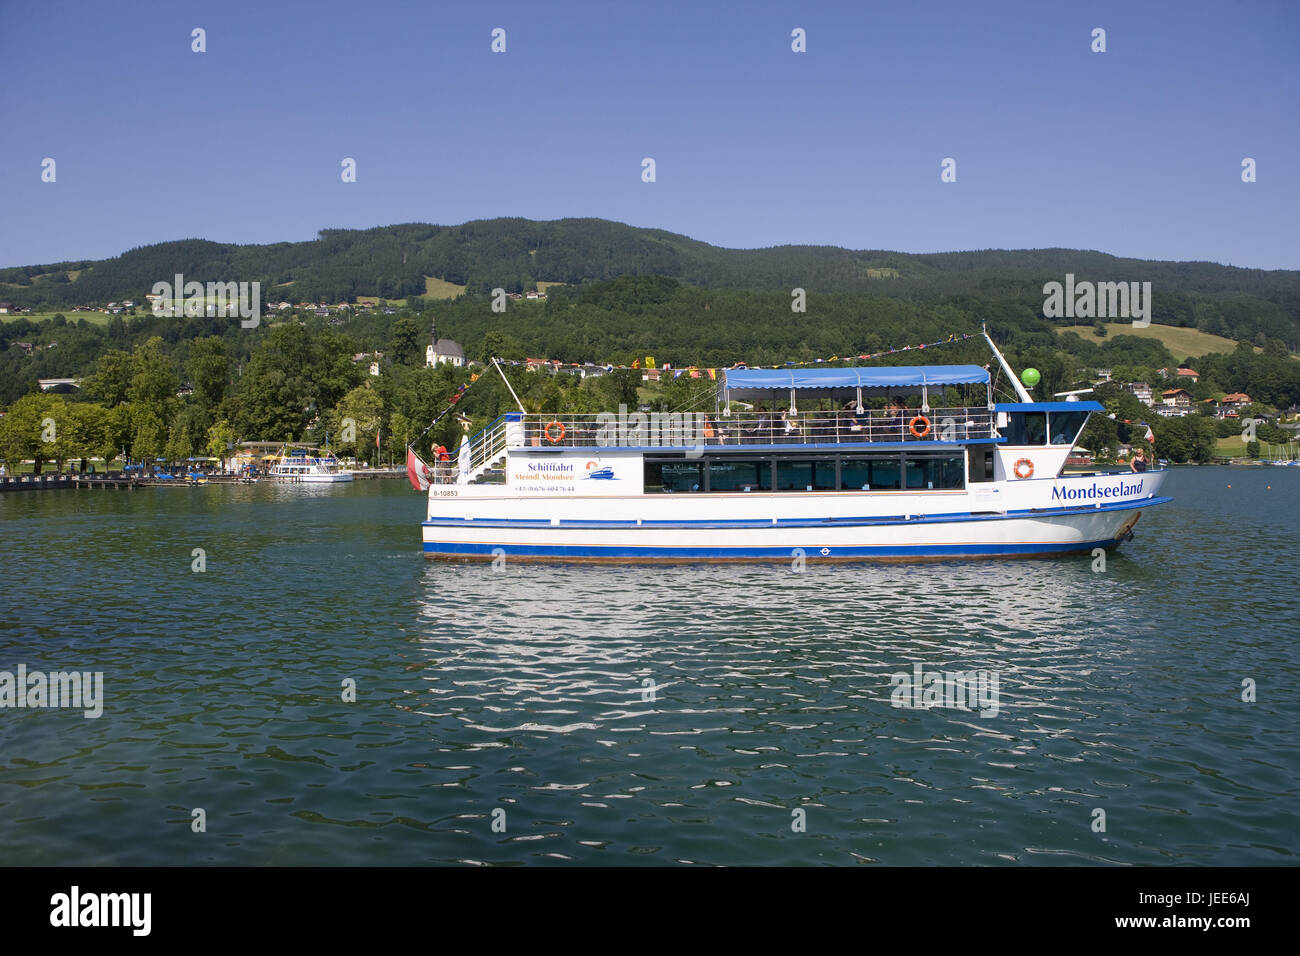 Austria, salt chamber property, lunar lake, holiday ship, Stock Photo